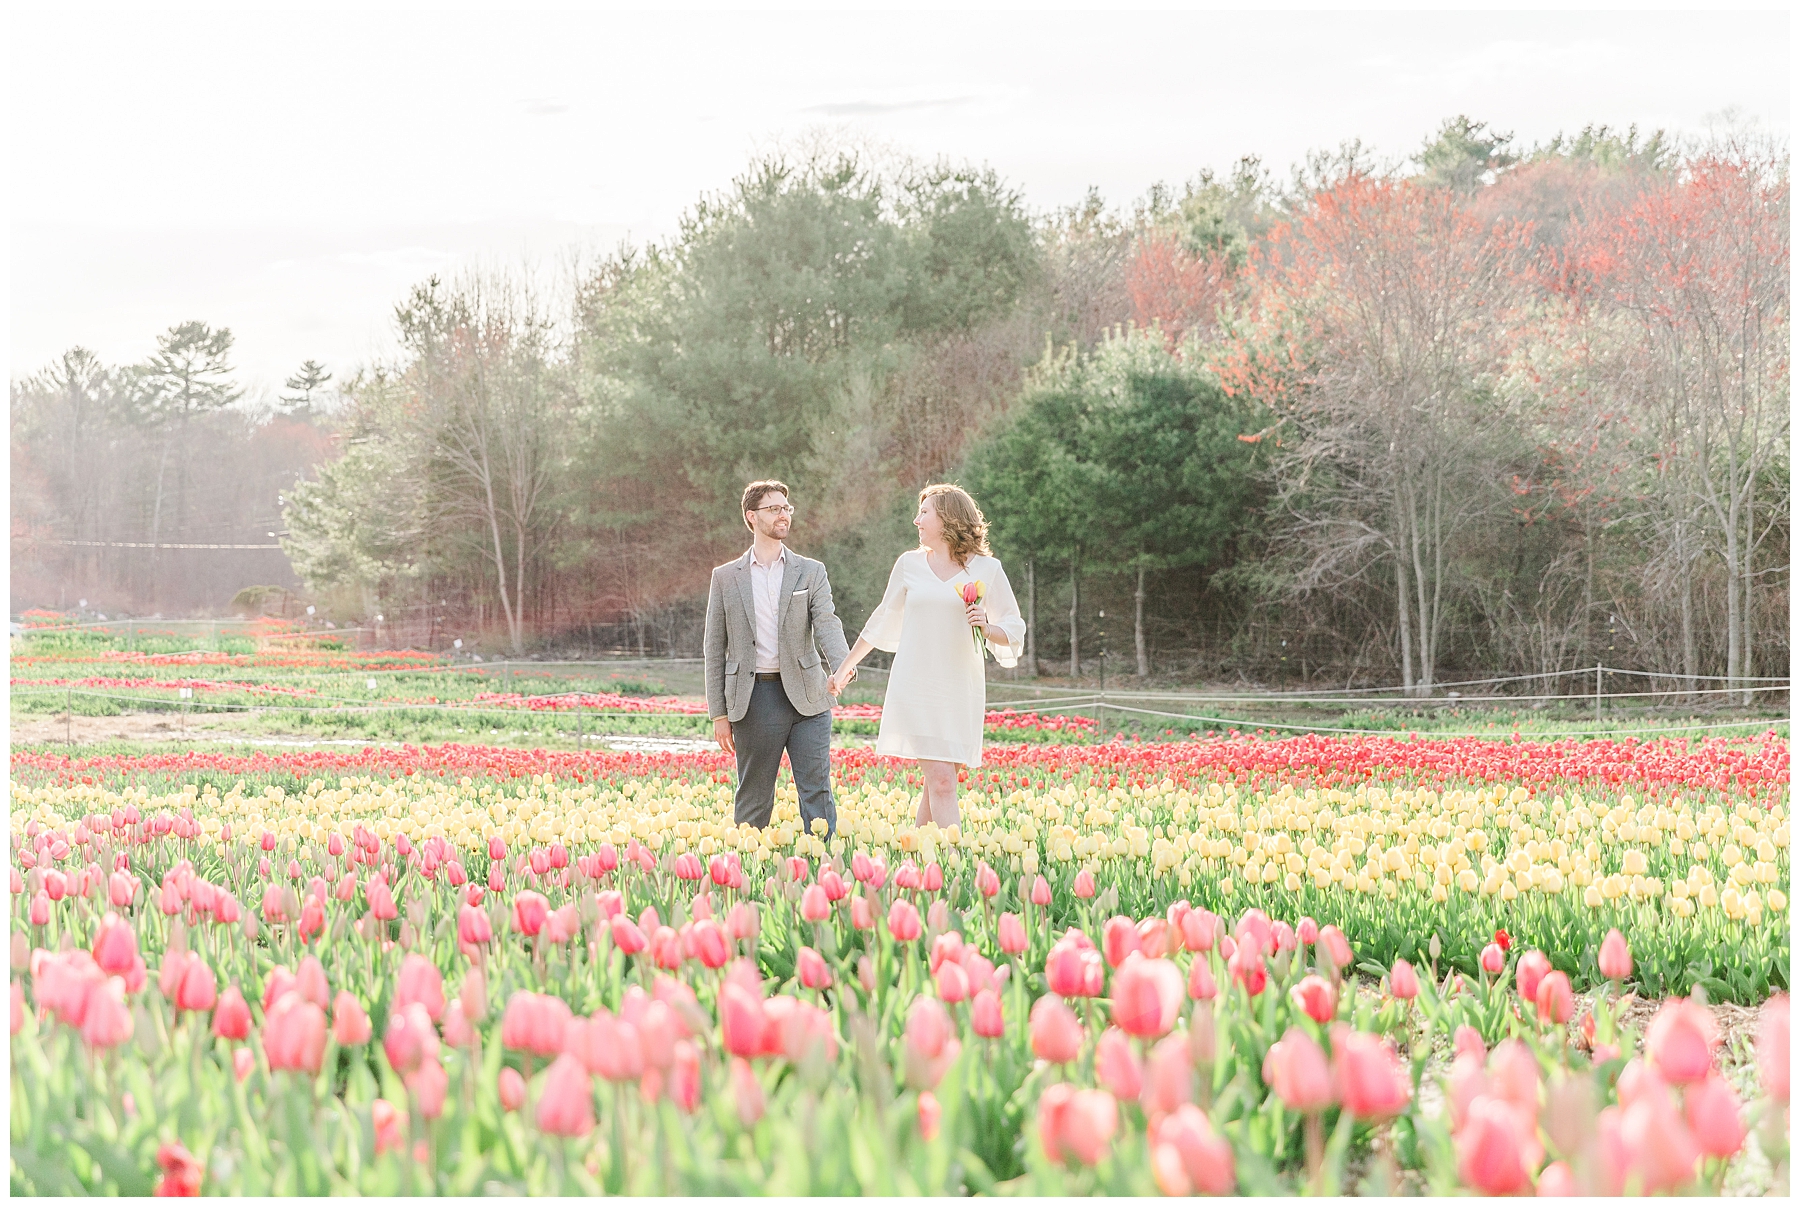 couple walks through field of pink tulips